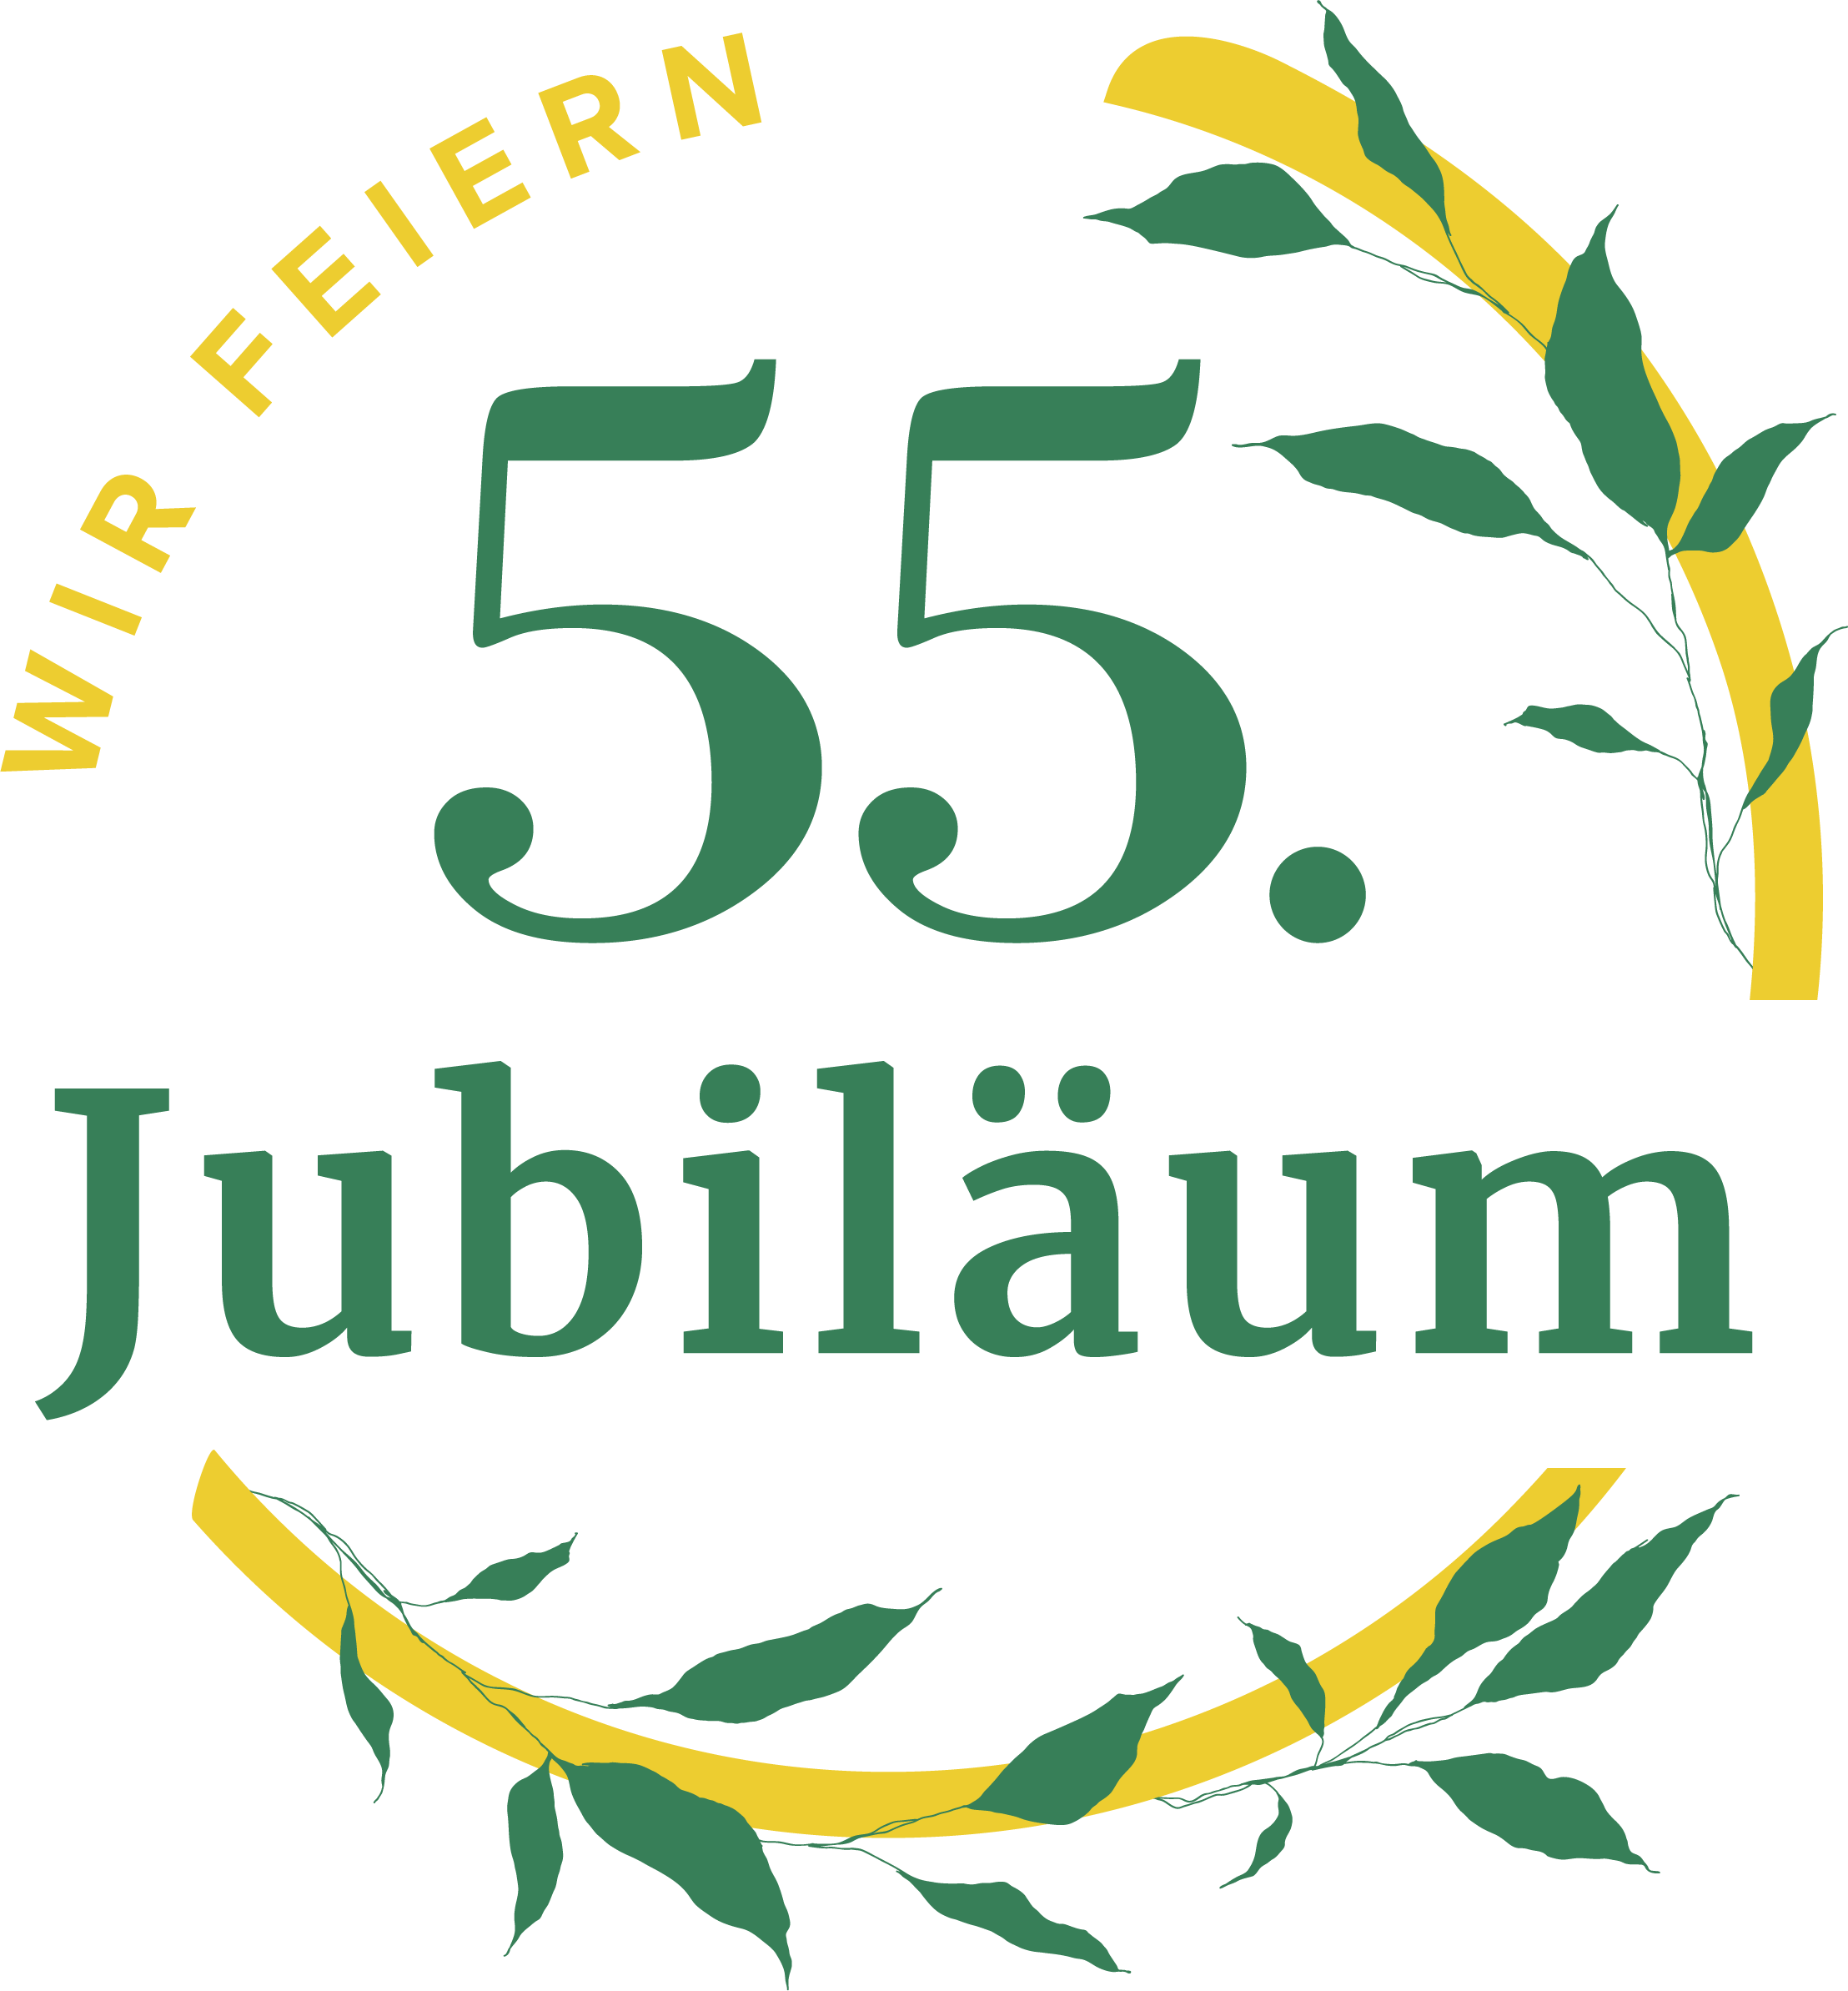 Emblem 55 Jahre Jubiläum